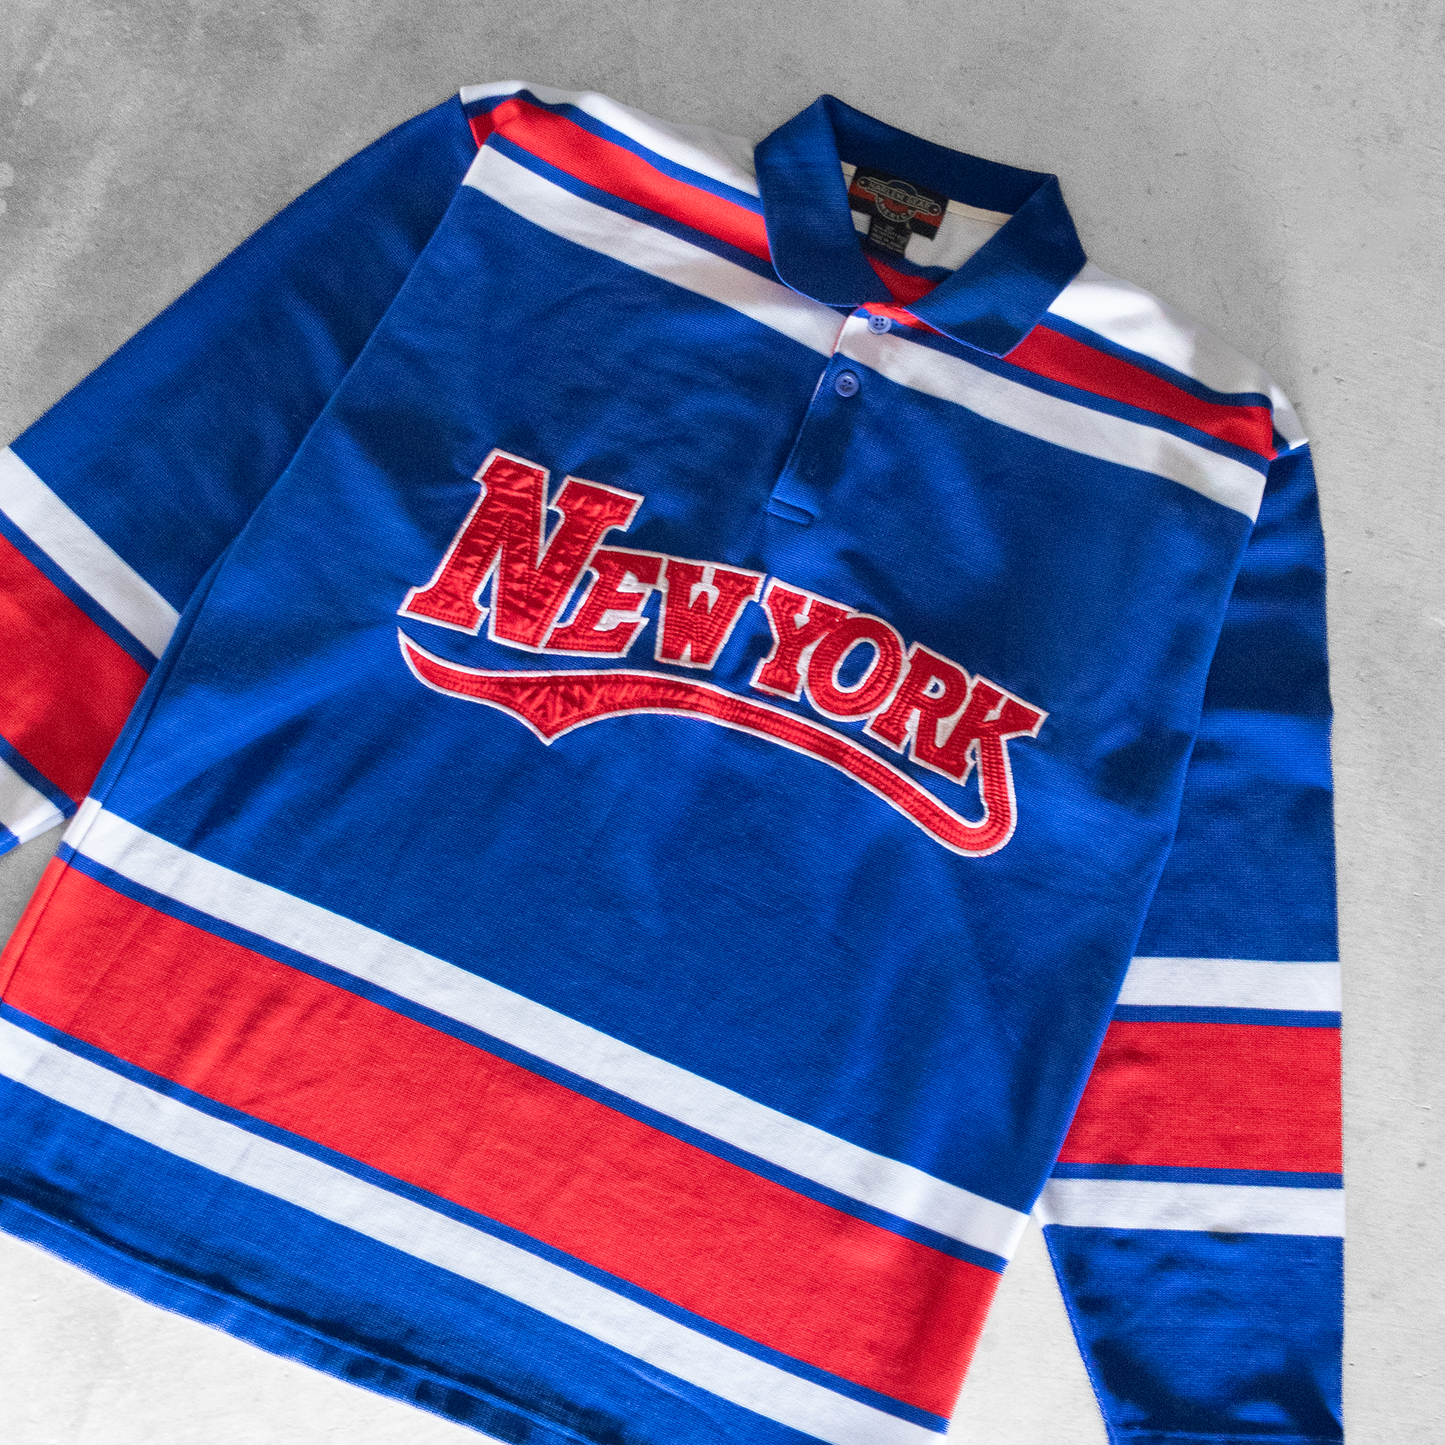 Vintage Harlem Gear New York Long Sleeve Jersey (XL)